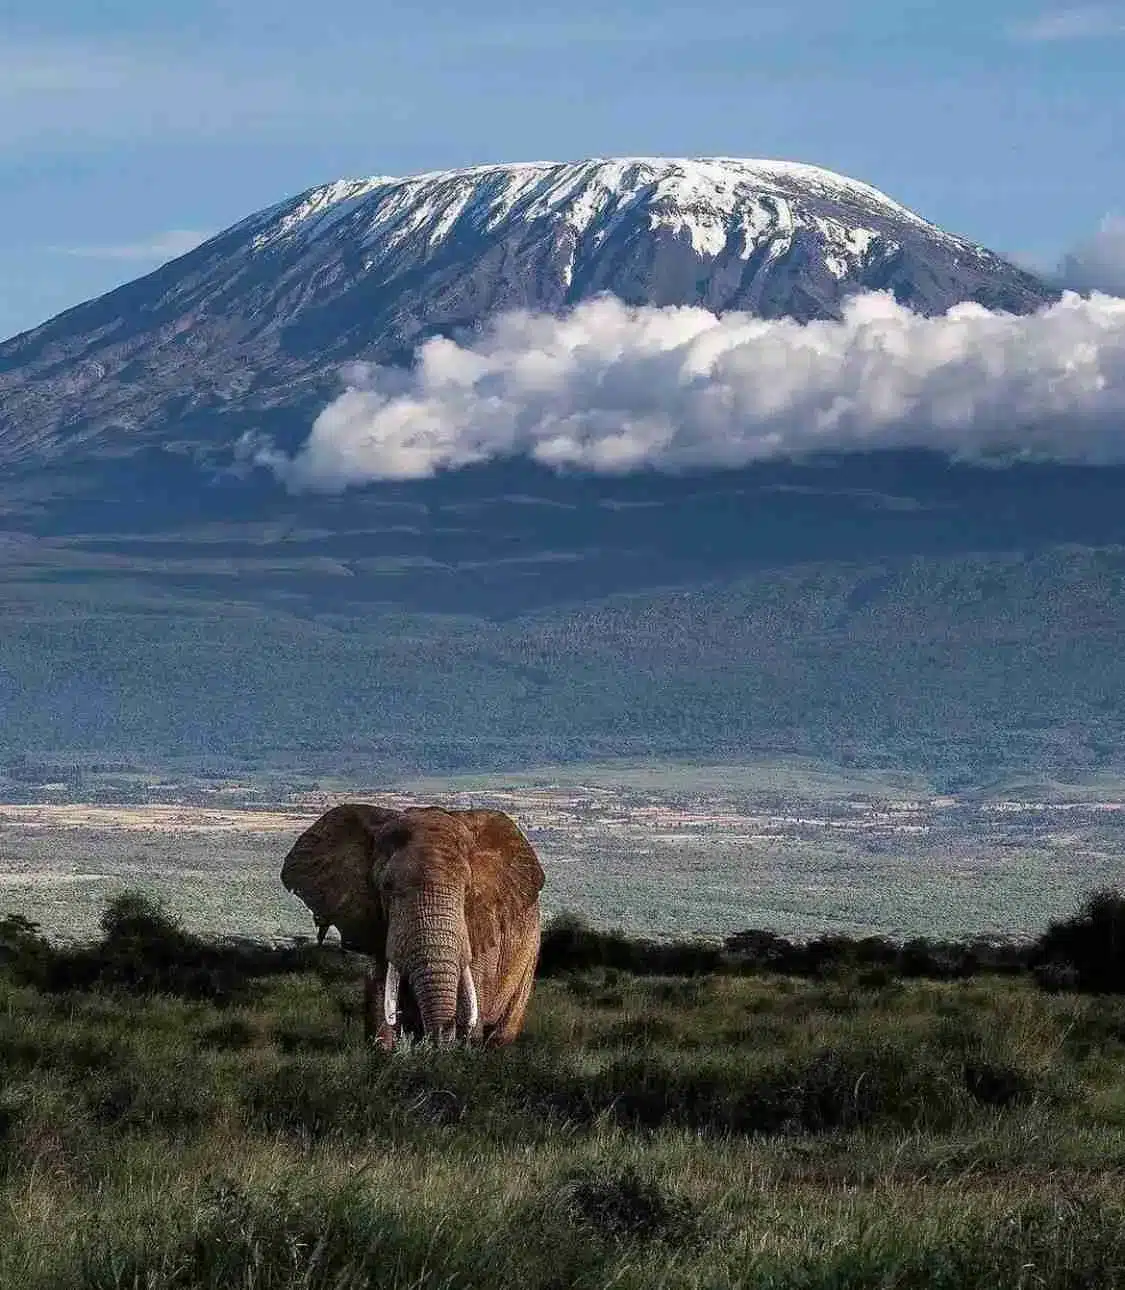 An elephantwalking the grasslands of Amboseli